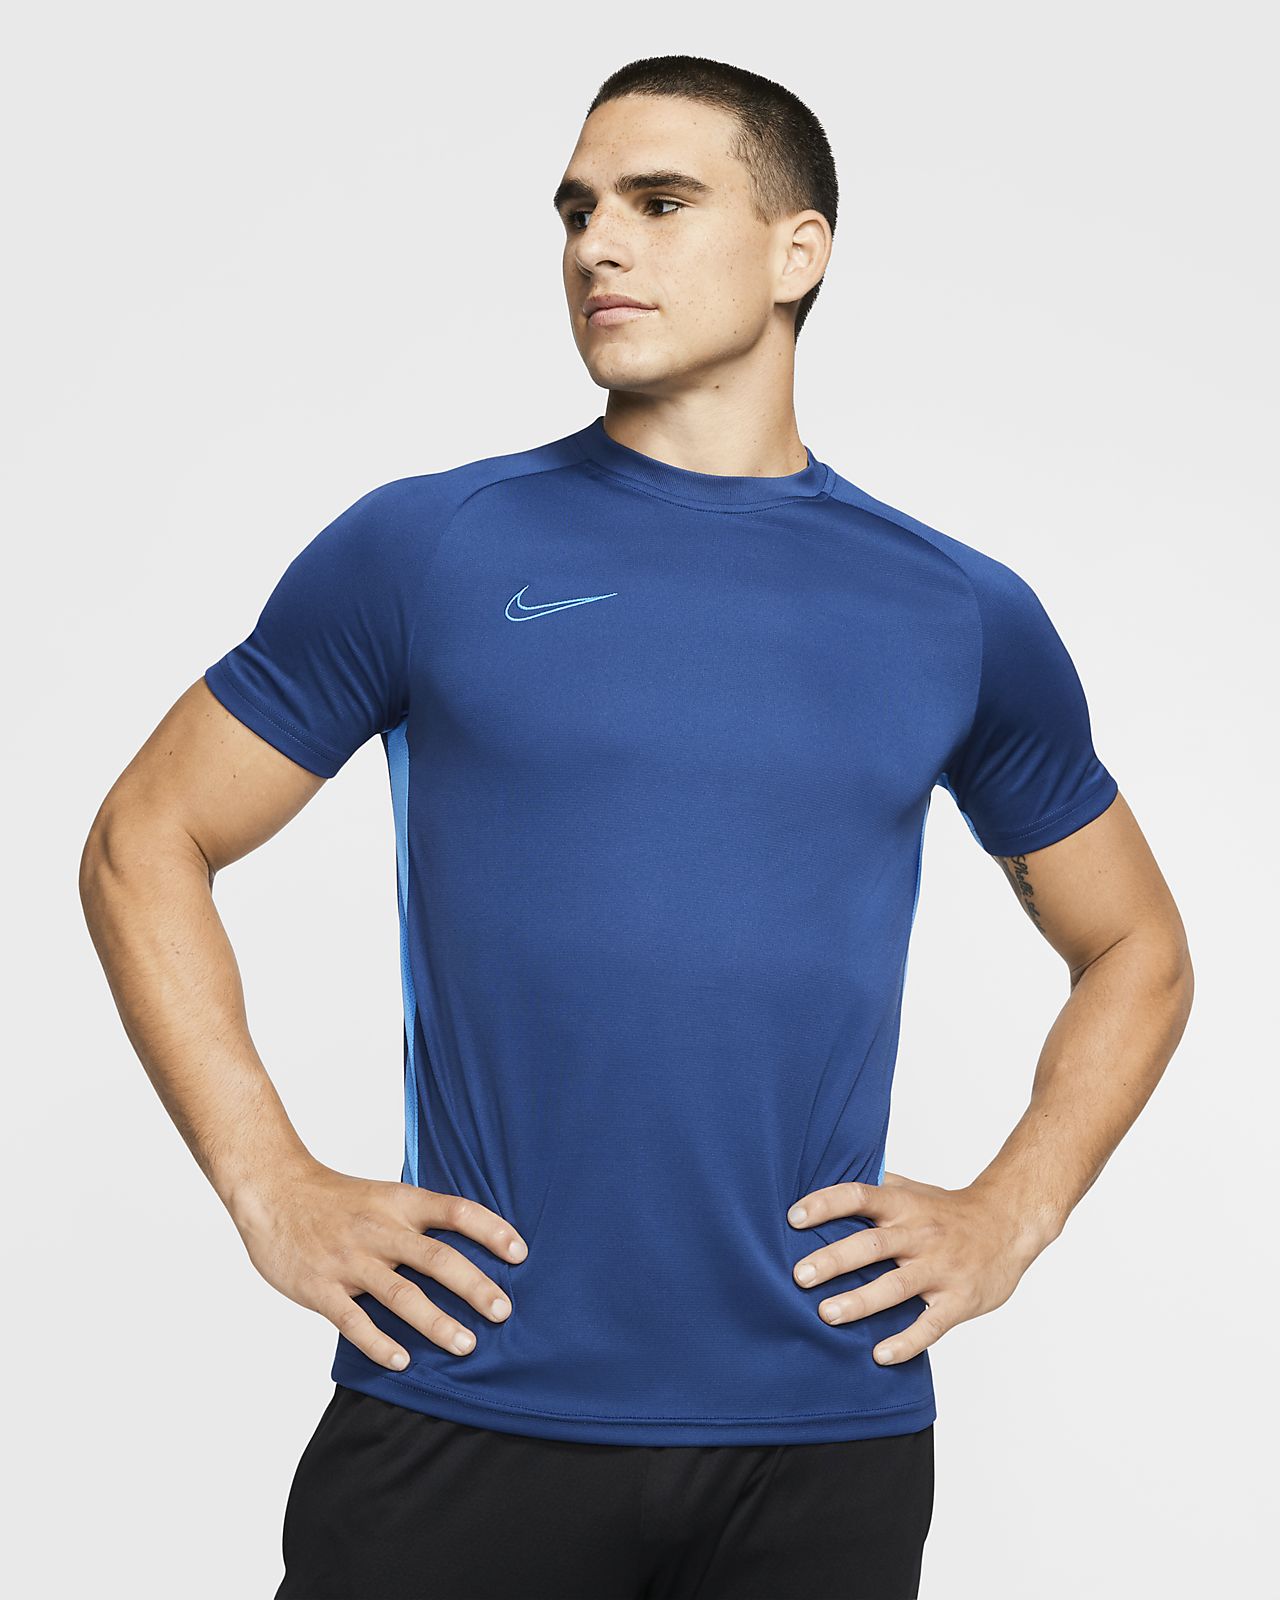 Football Short-Sleeve Top. Nike NZ